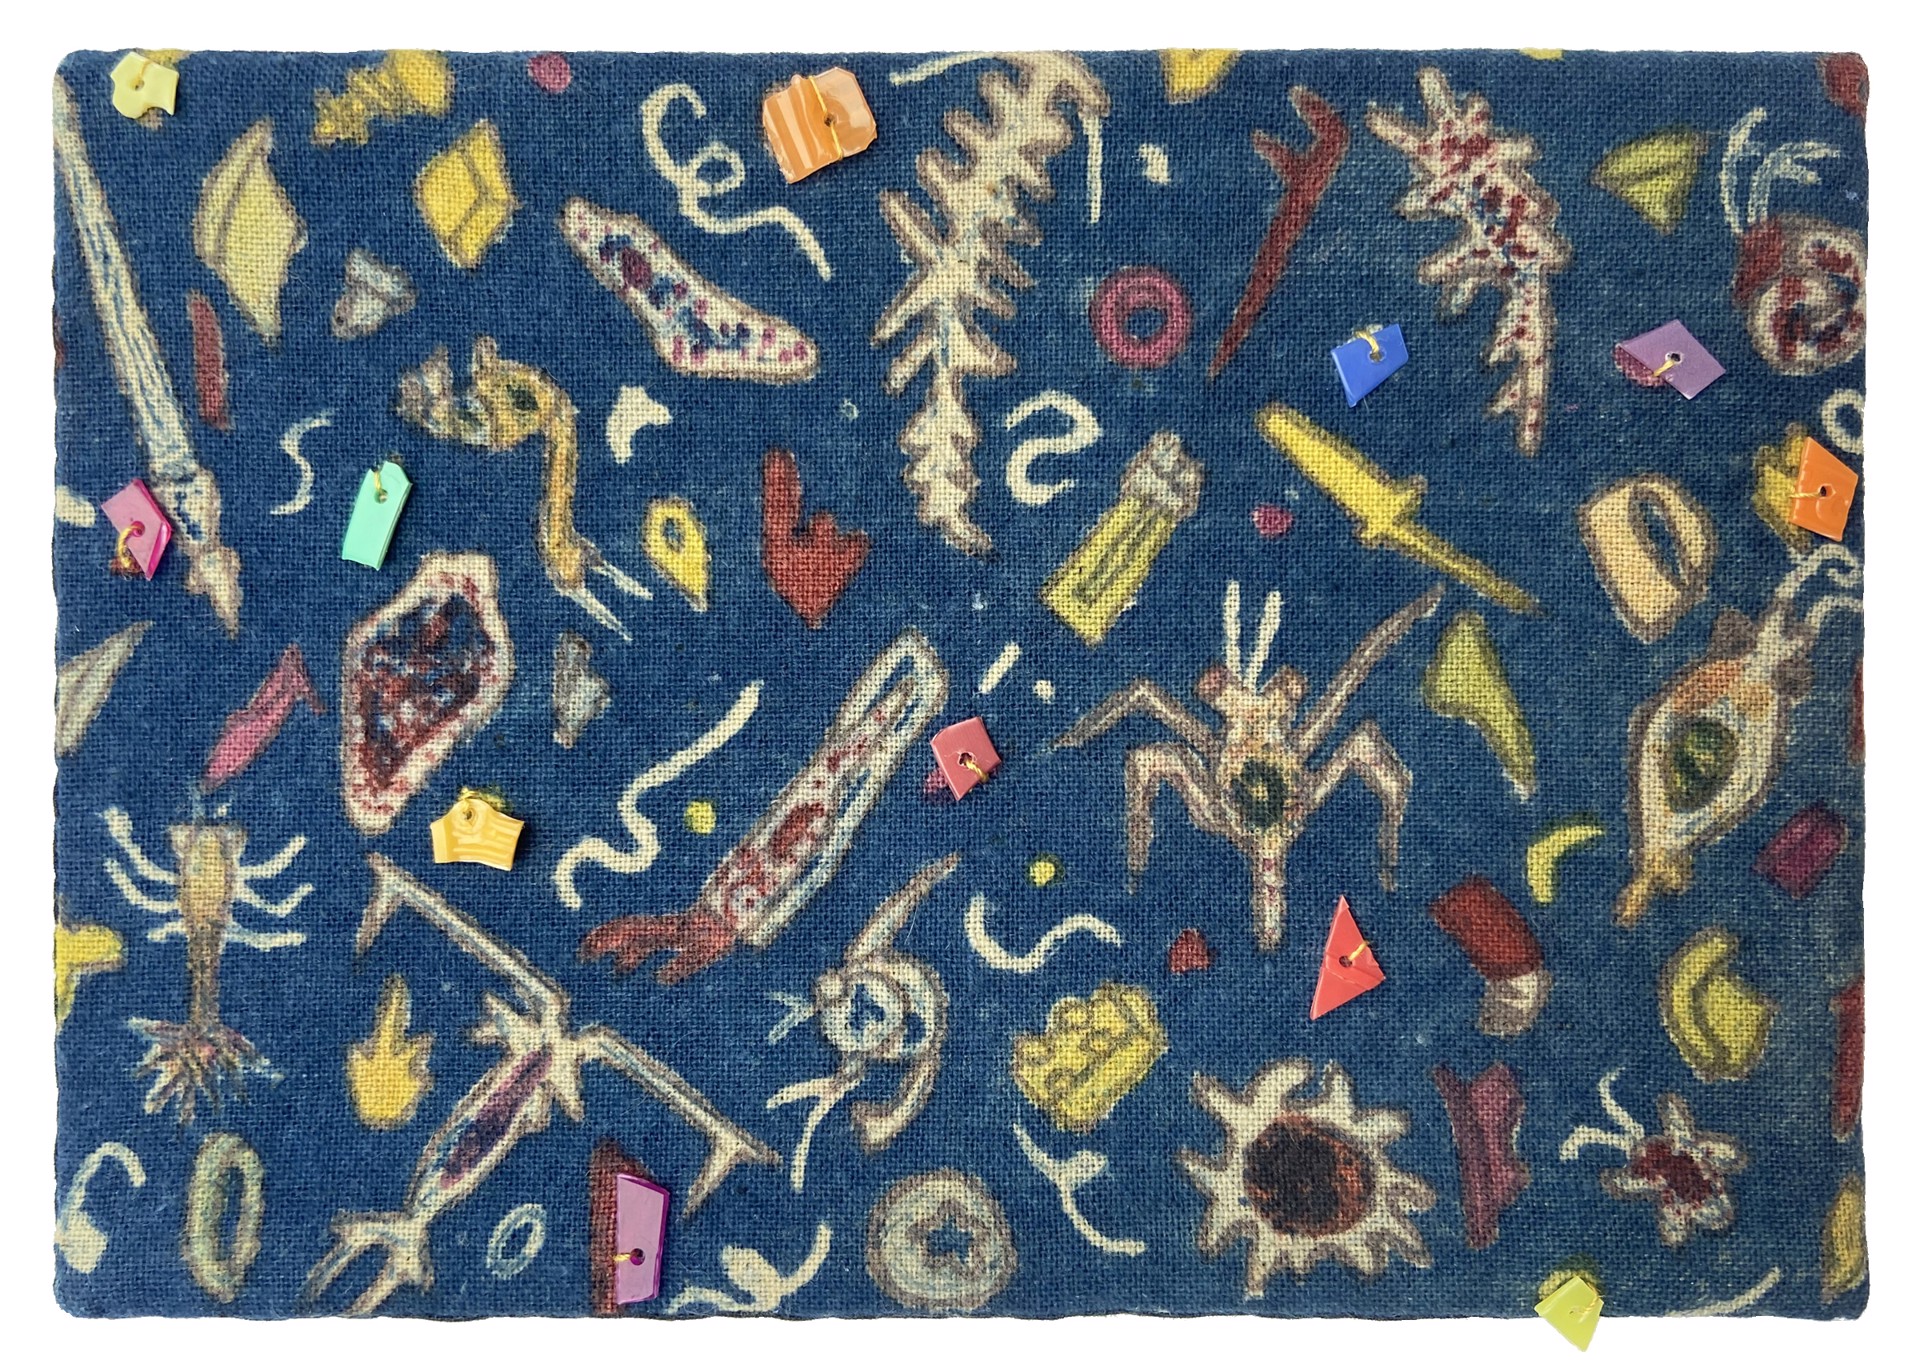 Plankton or Plastics by Jamie Bourgeois